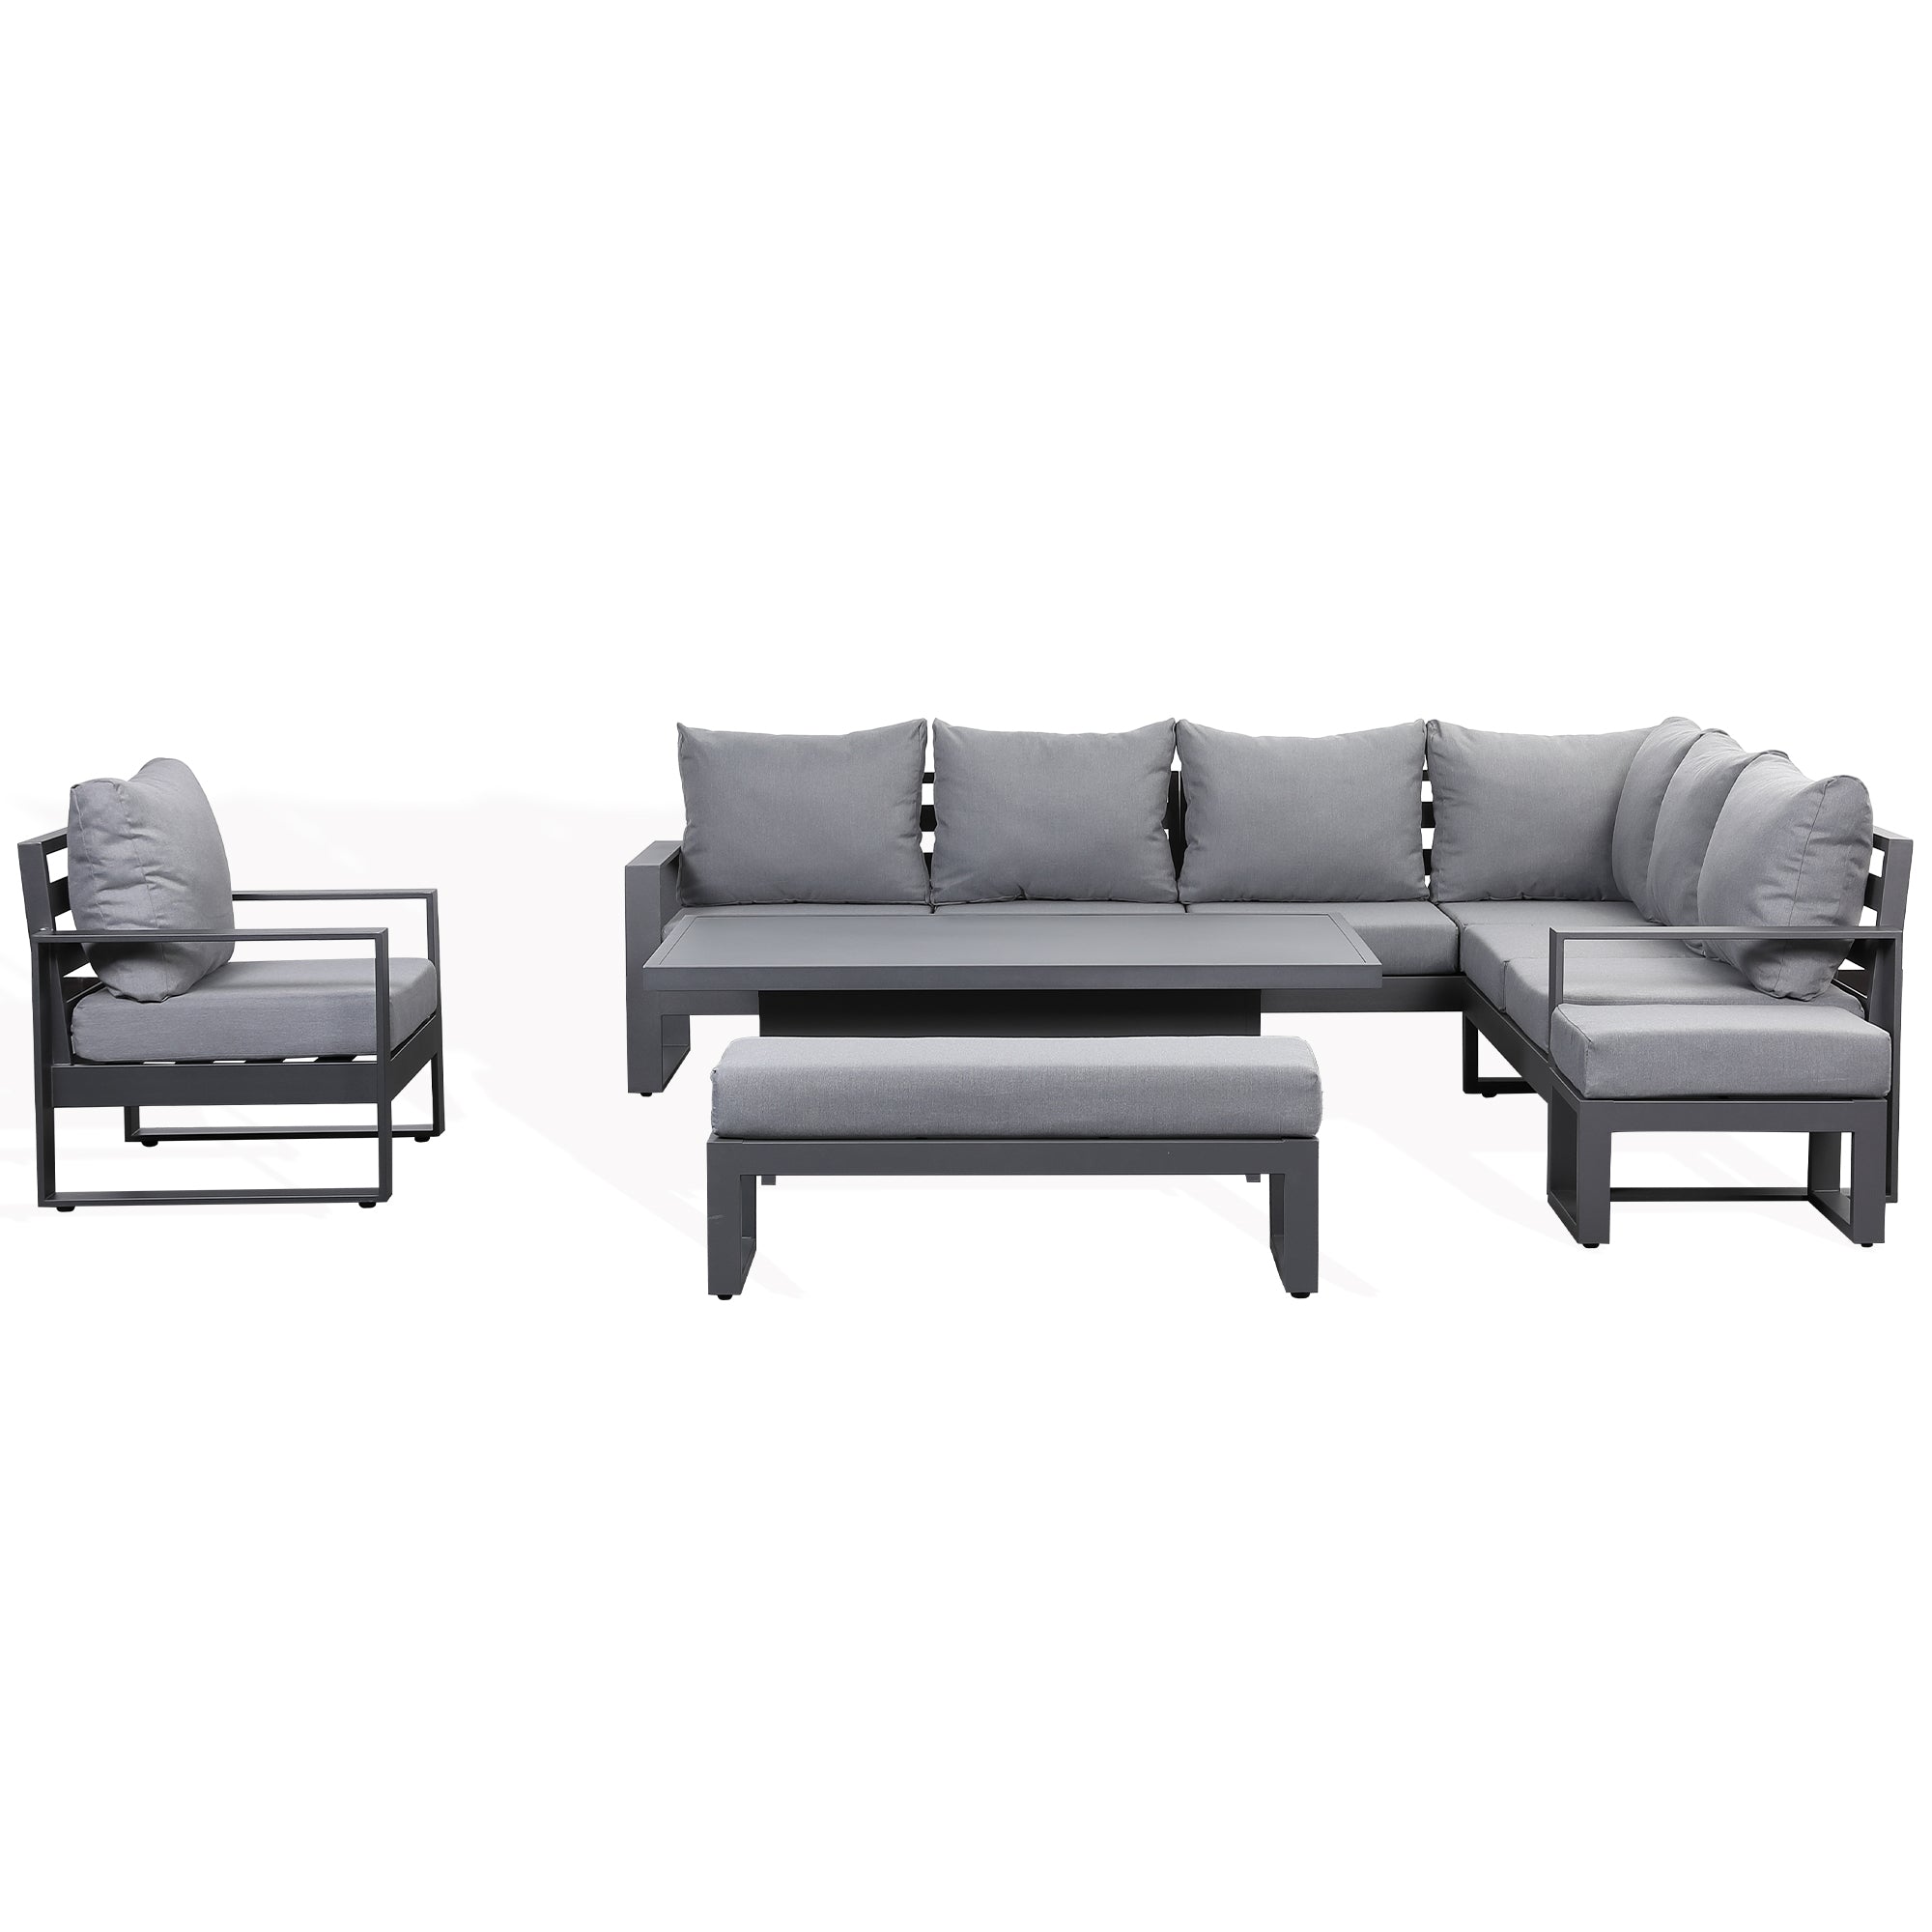 Halo Range Elite RHF Corner Sofa Set - Charcoal Aluminium Frame with Grey cushions